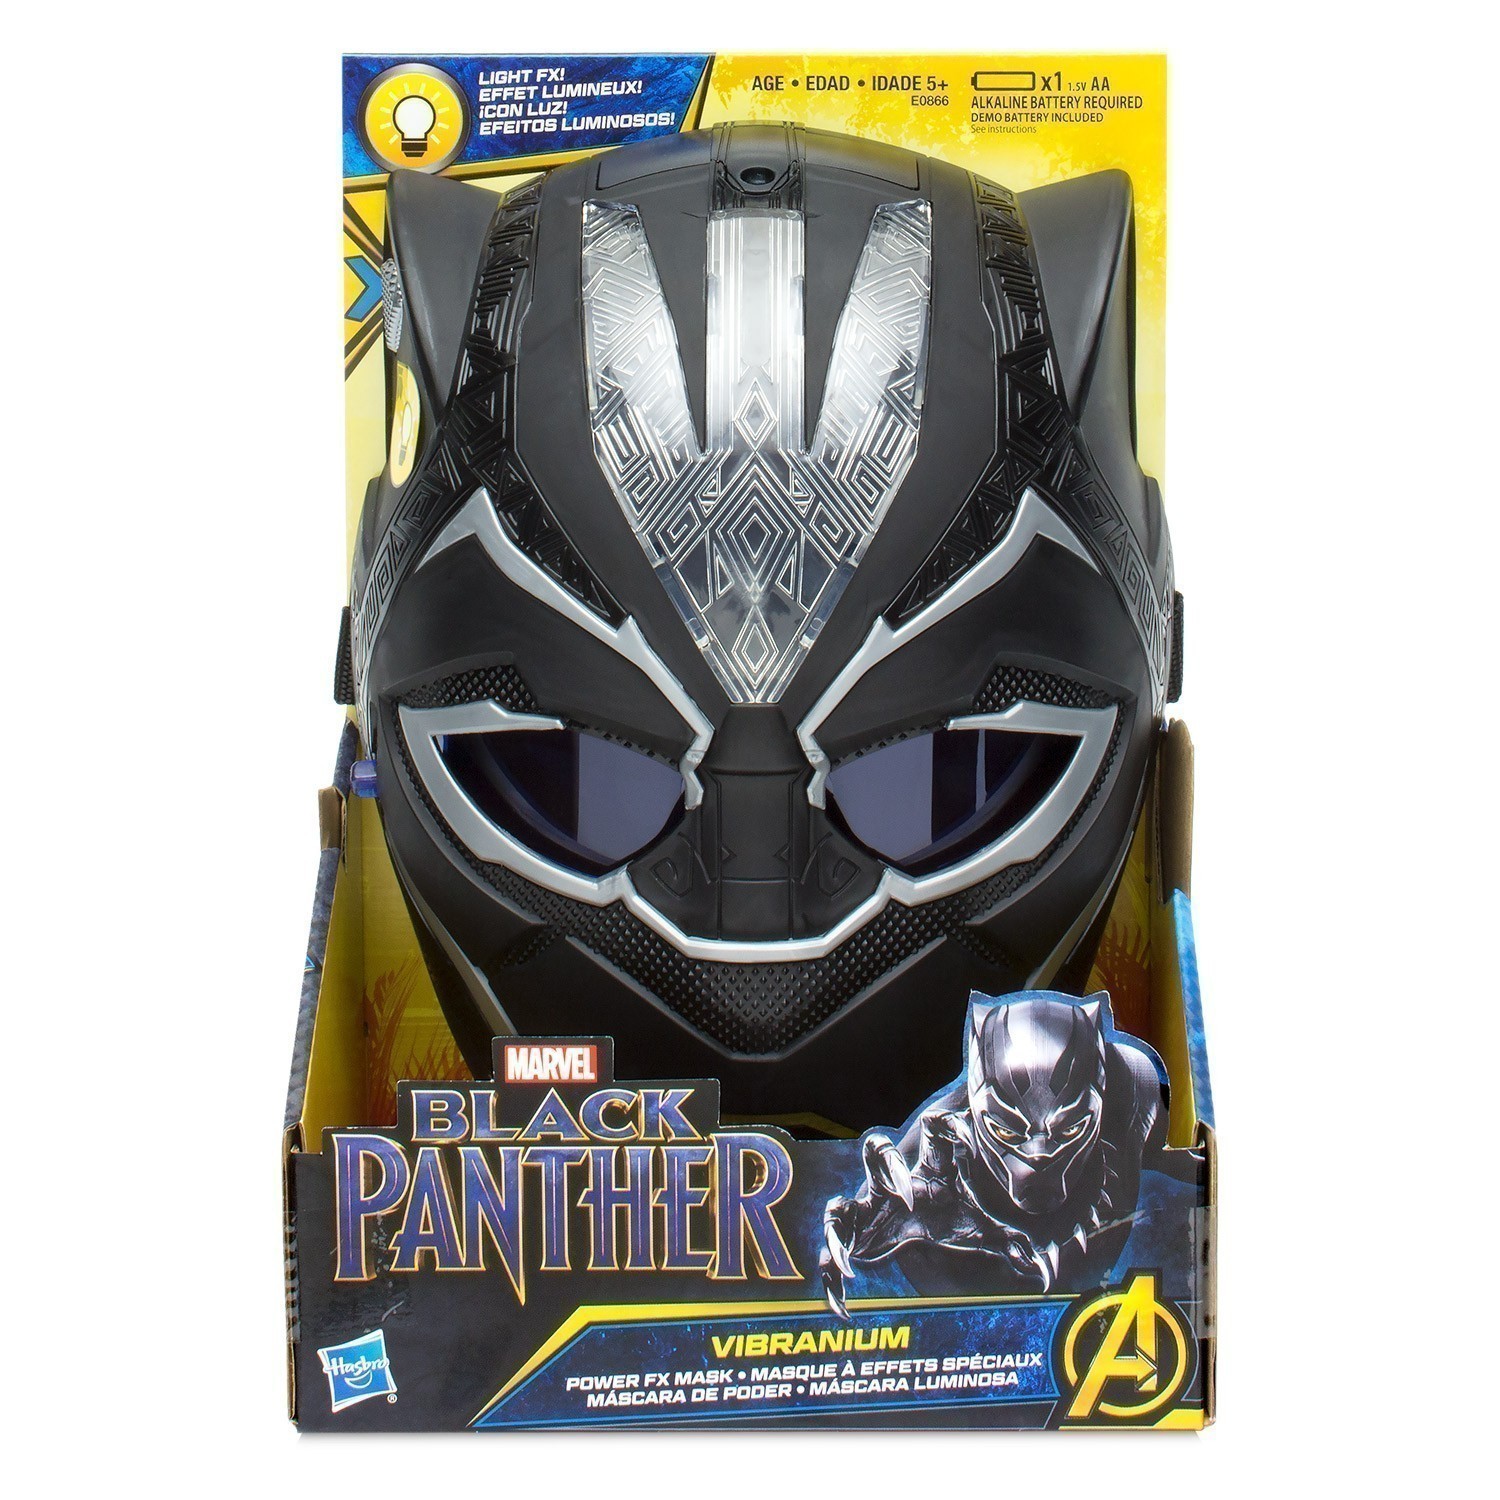 Marvel - Black Panther - Vibranium Power FX Mask